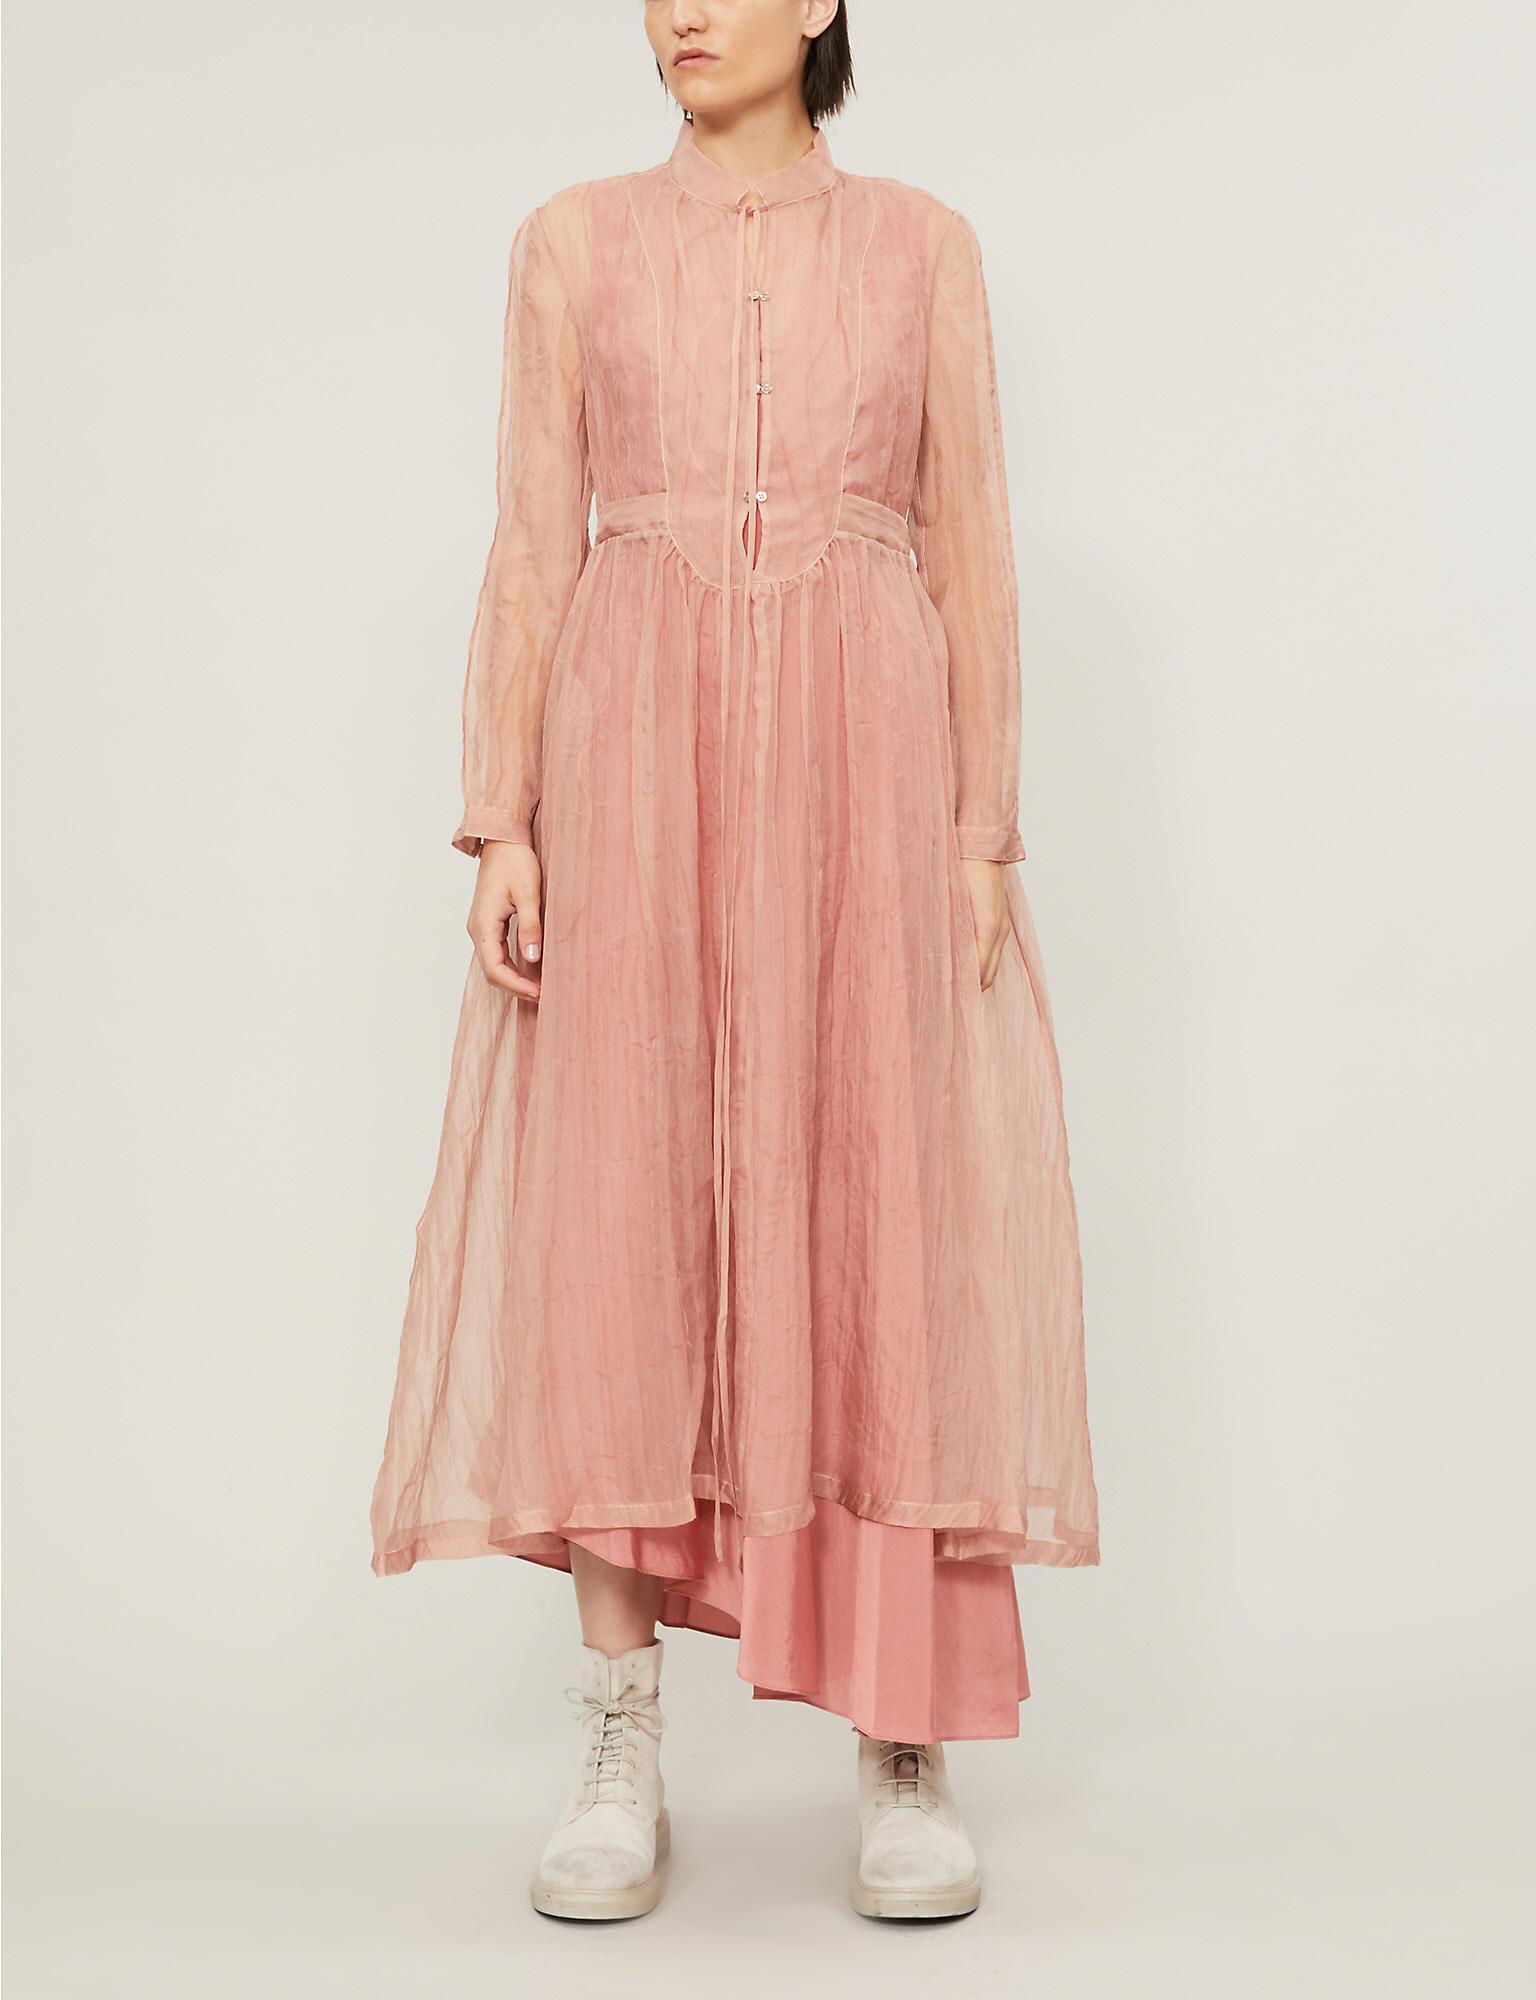 Renli Su Crinkled A-line Silk Midi Dress in Pink - Lyst